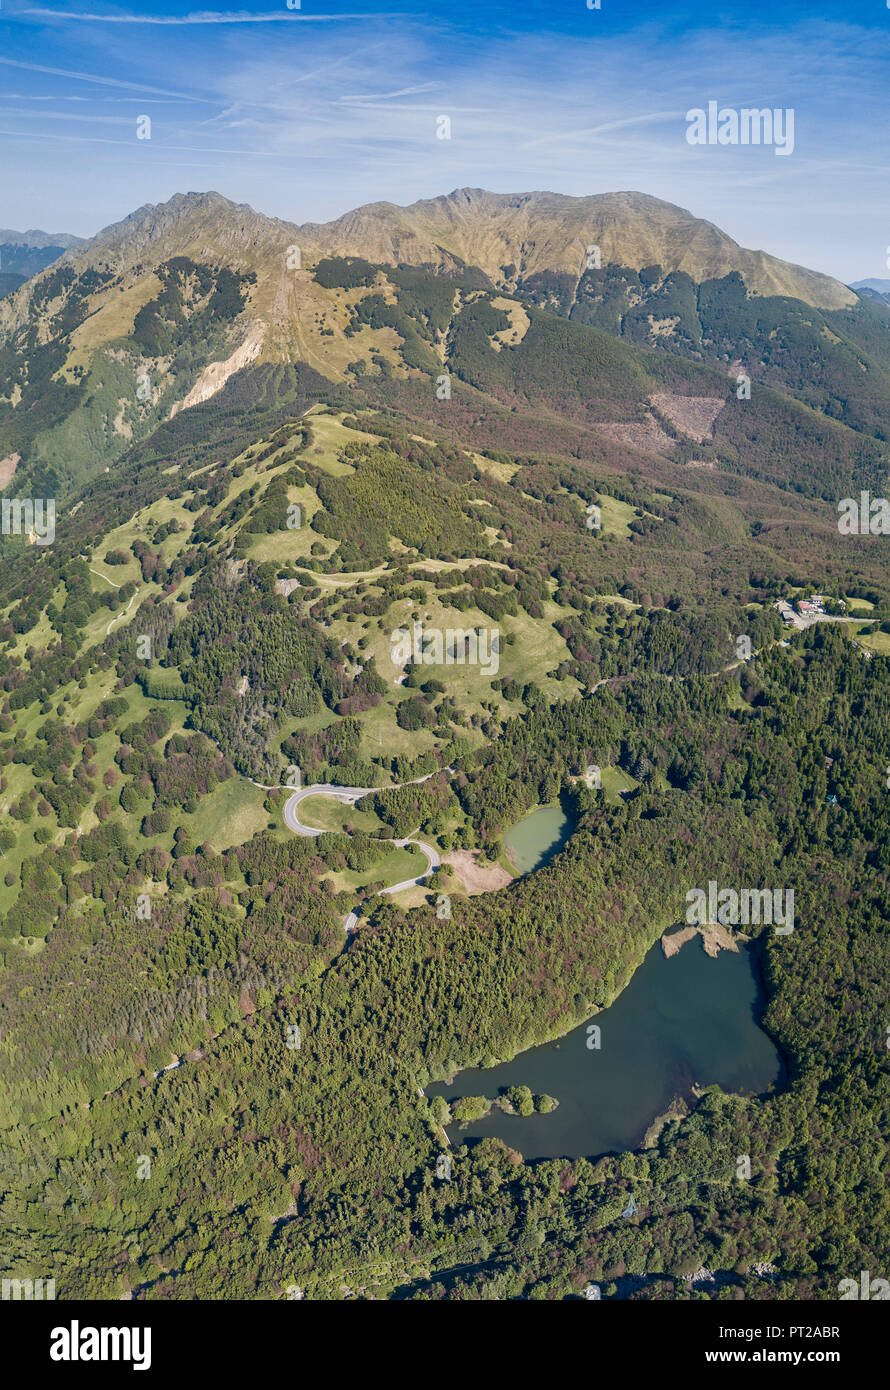 aerial view of the mountain Alto, municipality of Ventasso, Reggio Emilia province, Emilia Romagna district, Italy, Europe Stock Photo